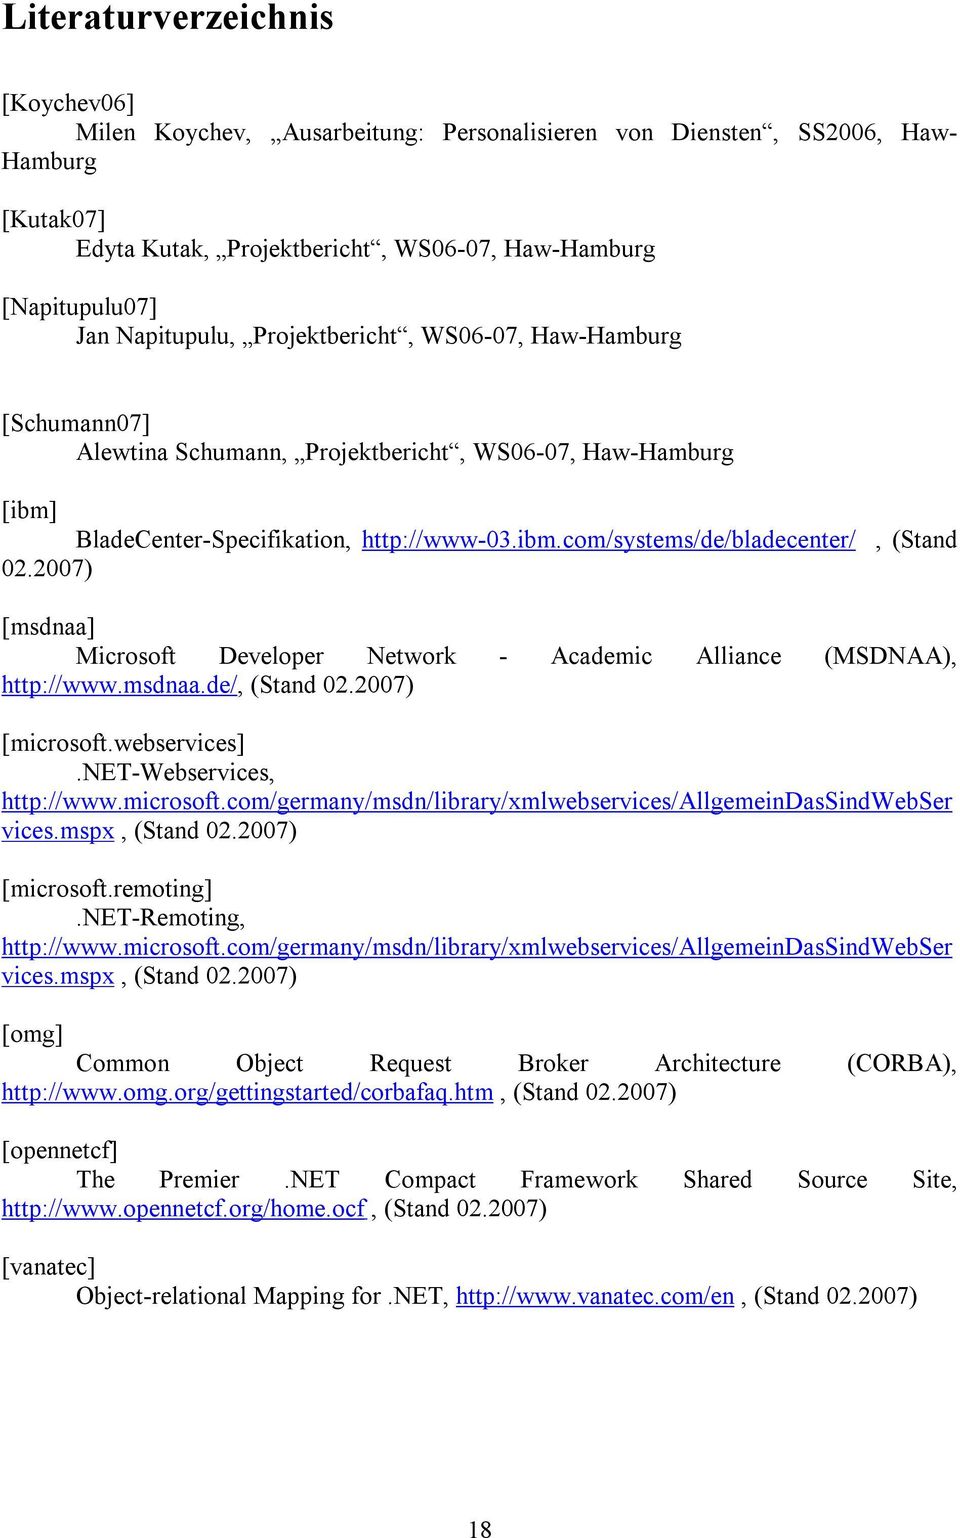 2007) [msdnaa] Microsoft Developer Network - Academic Alliance (MSDNAA), http://www.msdnaa.de/, (Stand 02.2007) [microsoft.webservices].net-webservices, http://www.microsoft.com/germany/msdn/library/xmlwebservices/allgemeindassindwebser vices.